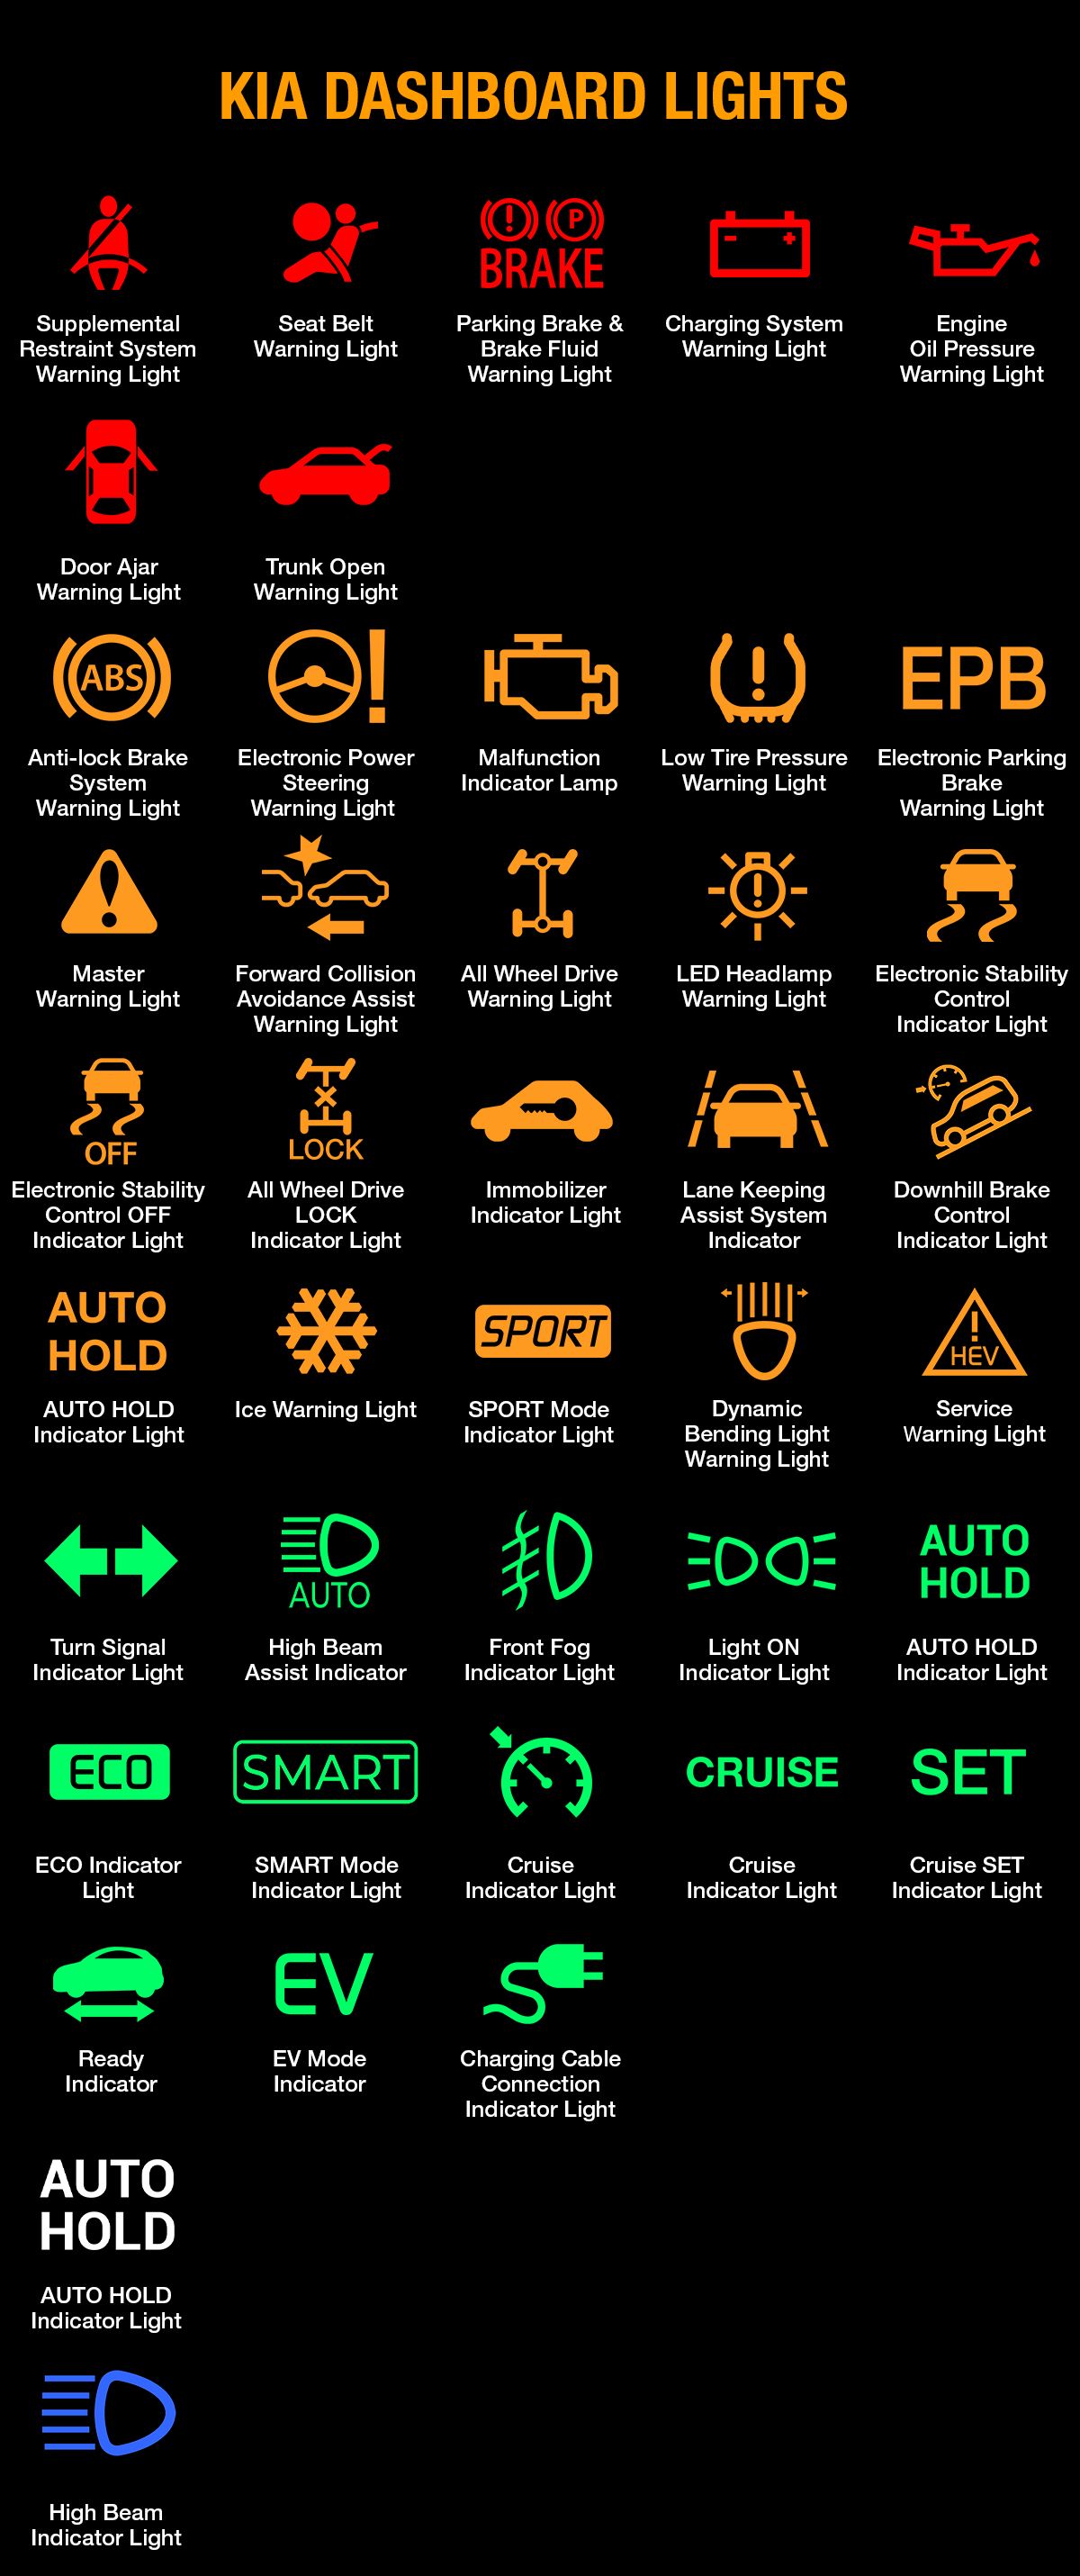 Kia Dashboard Warning Lights Symbols And Meanings | Sexiz Pix